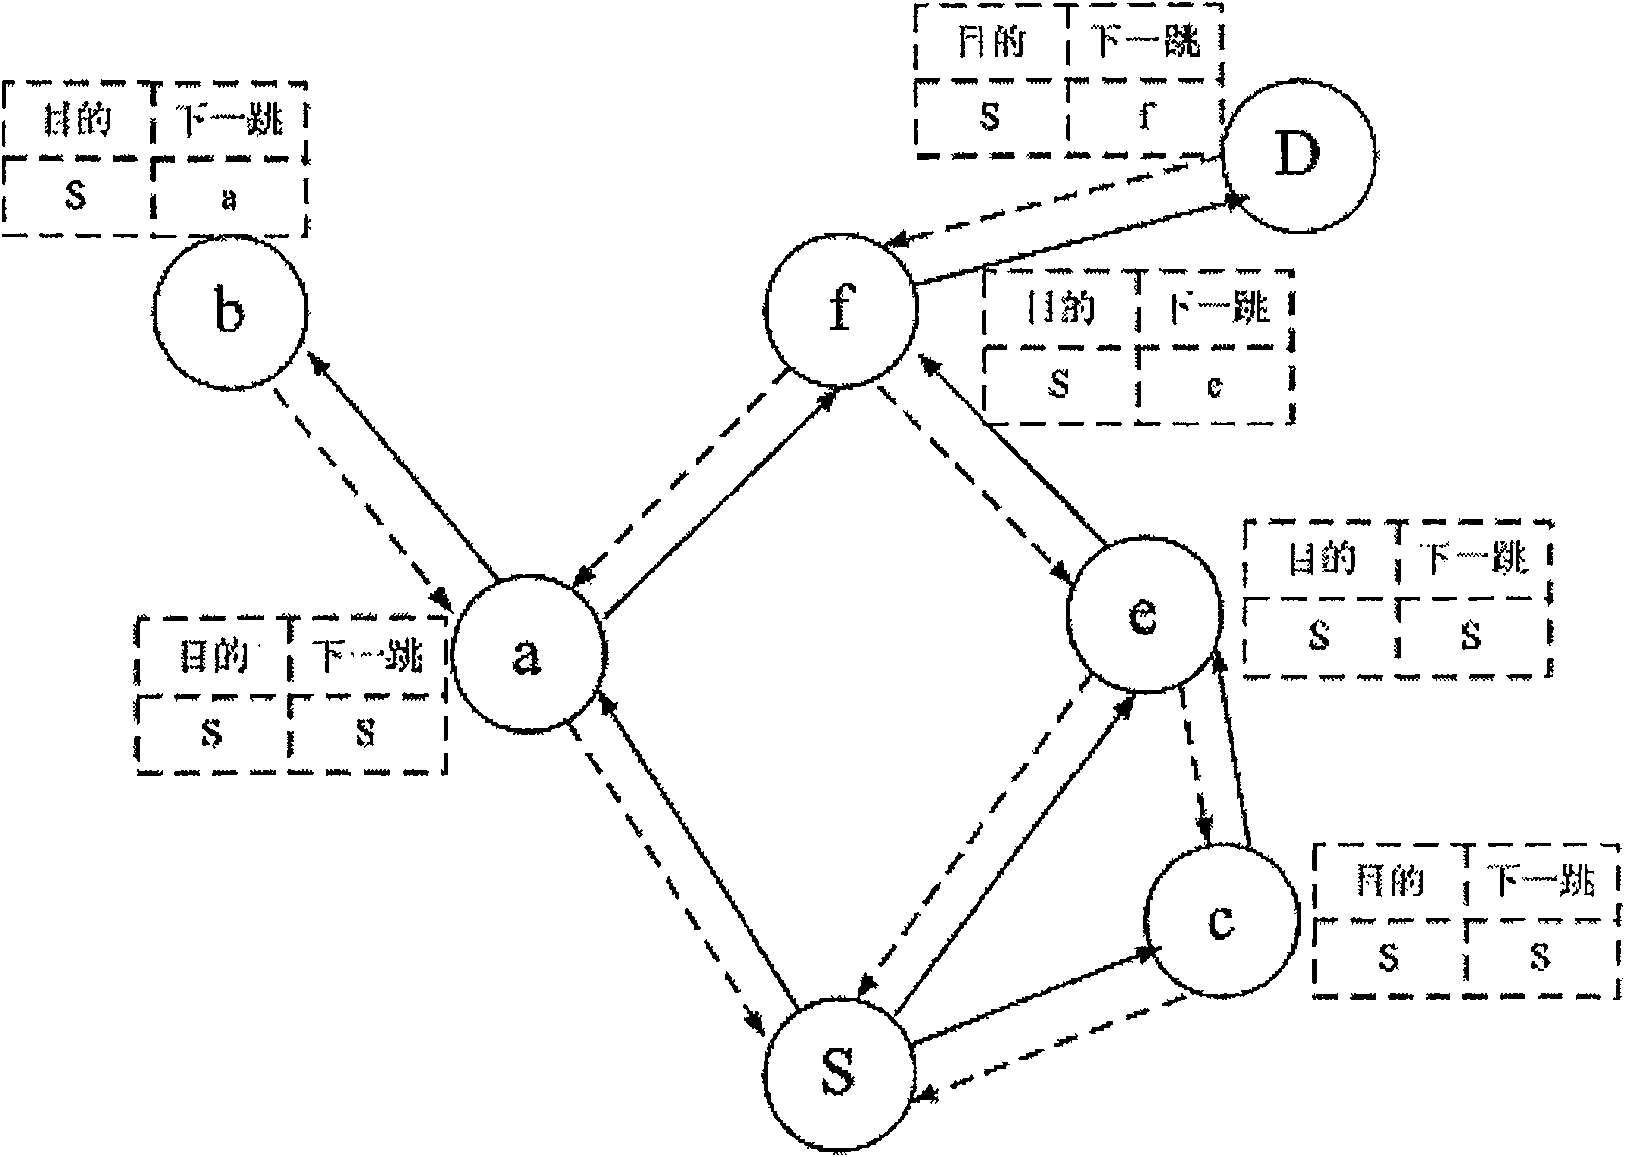 A method for route establishment under unidirectional link environment